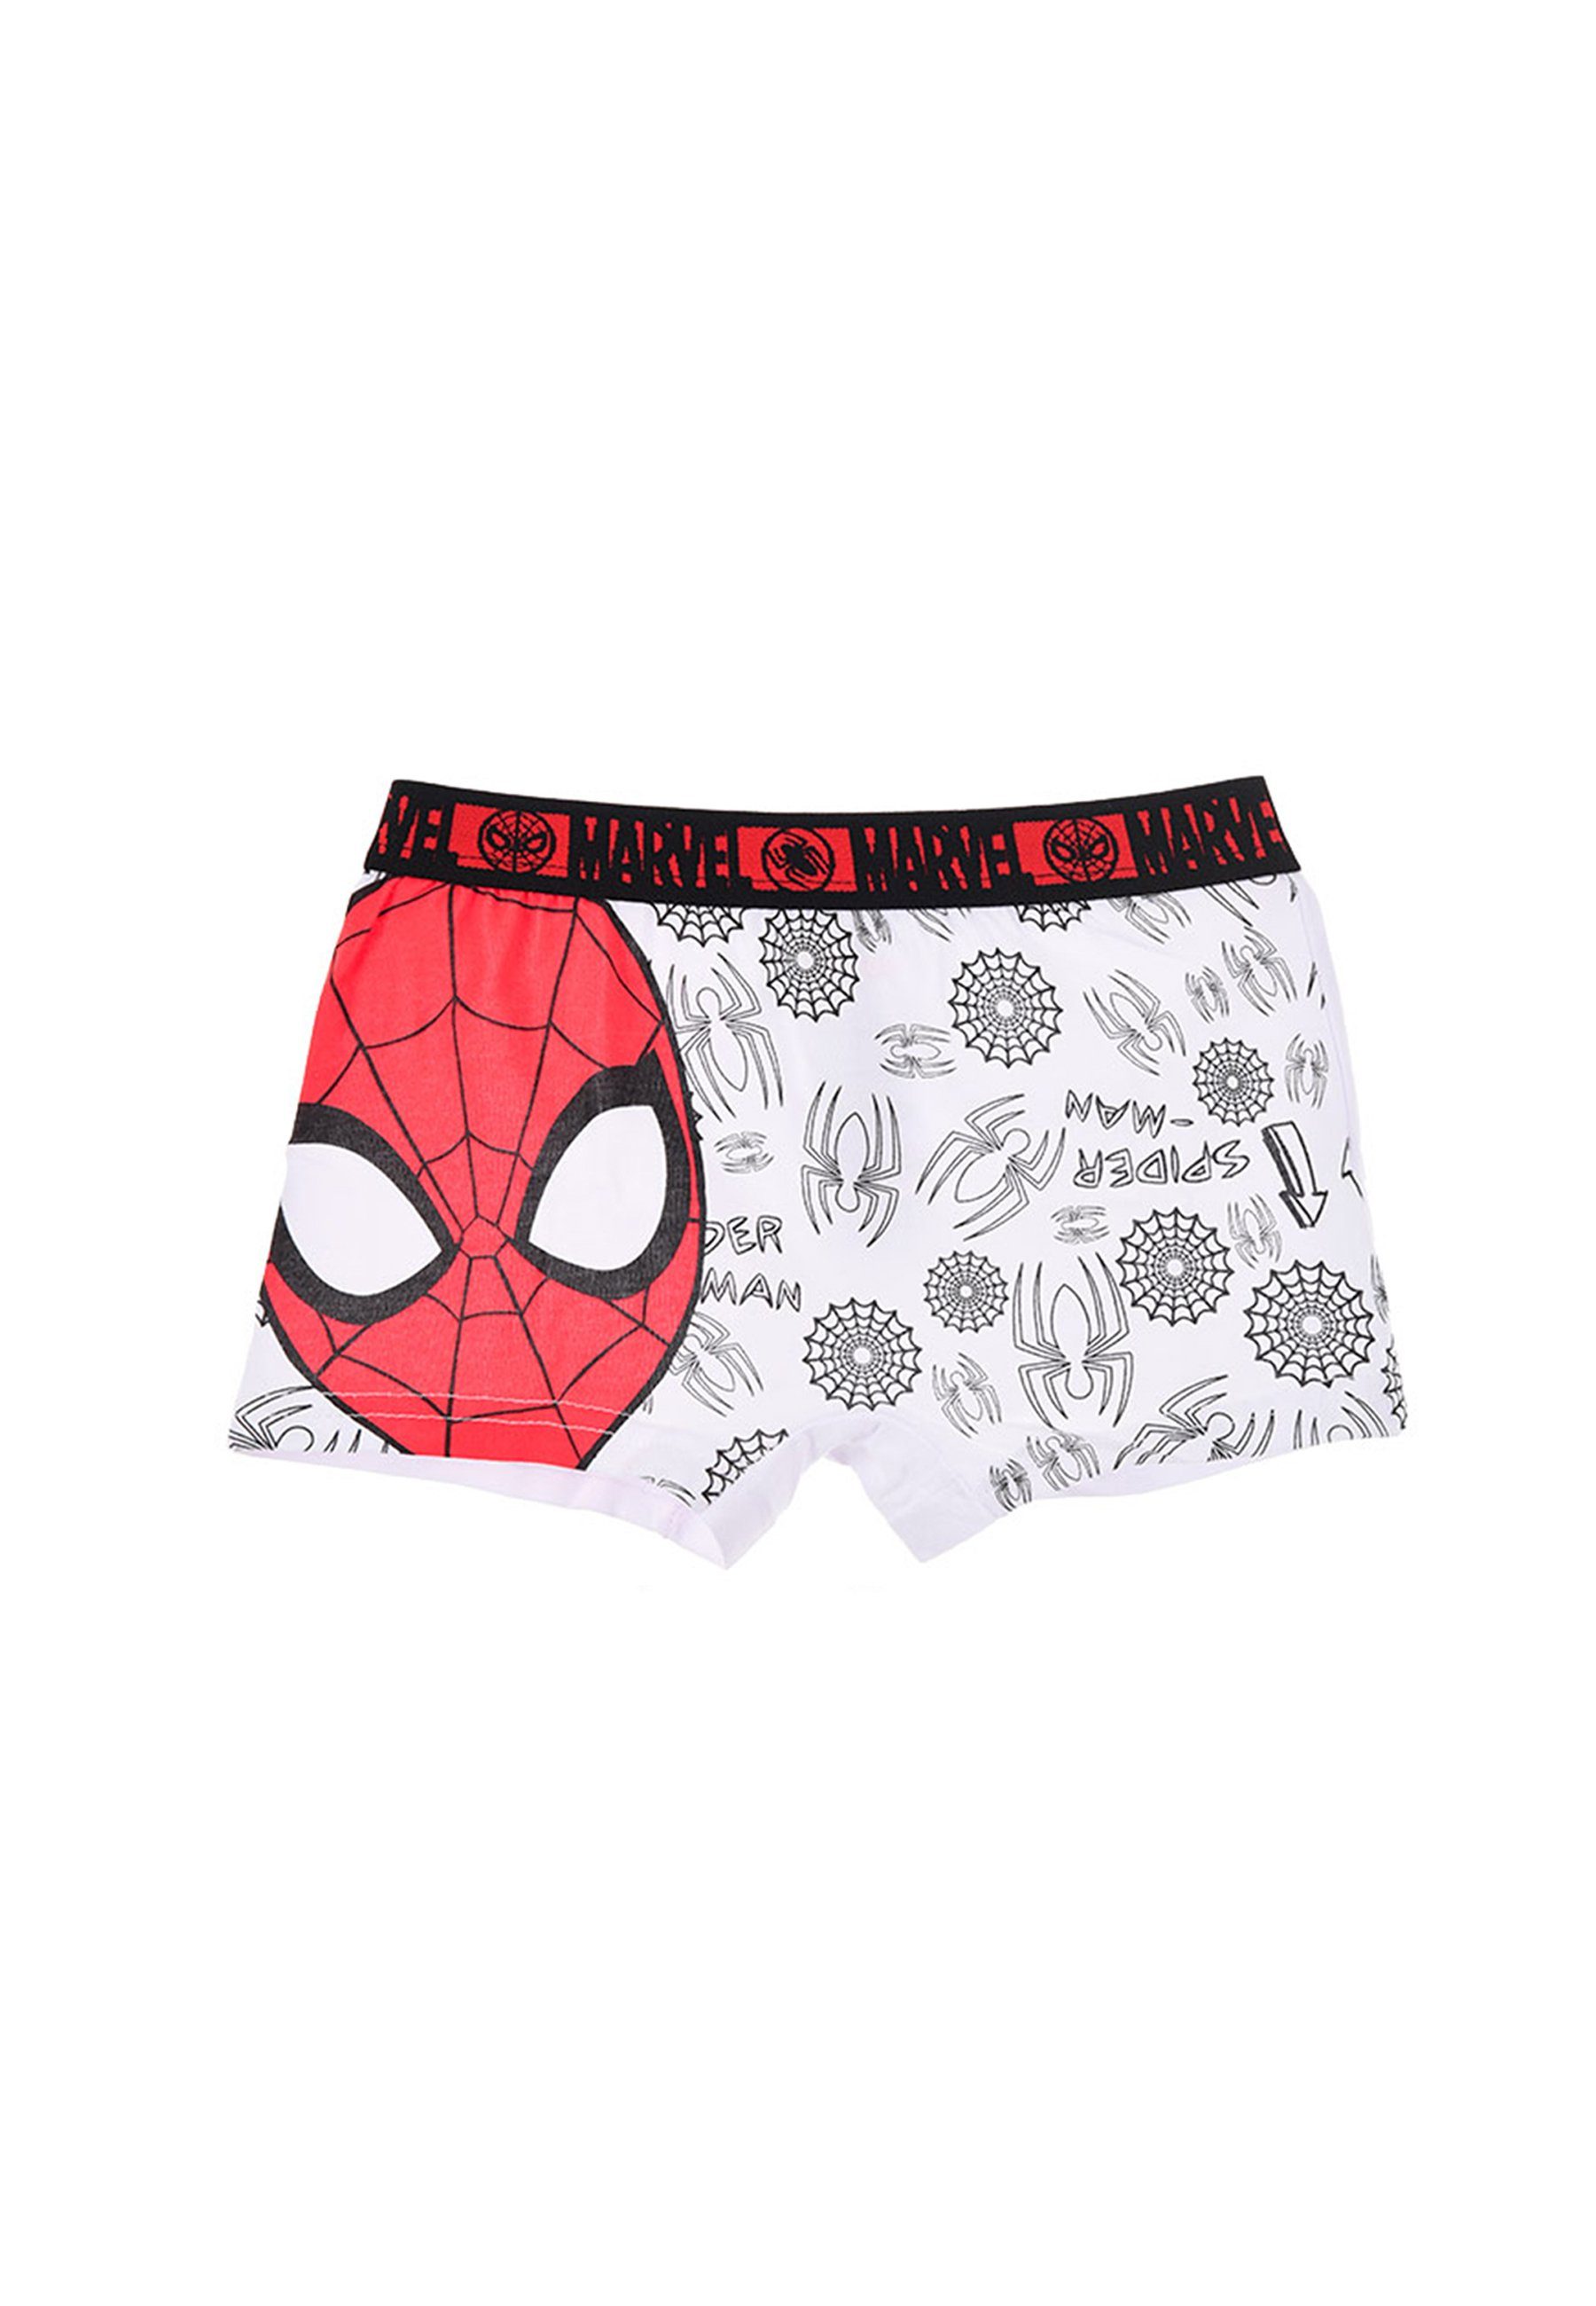 Unterhosen Spiderman Pants Boxershorts Kinder Jungen